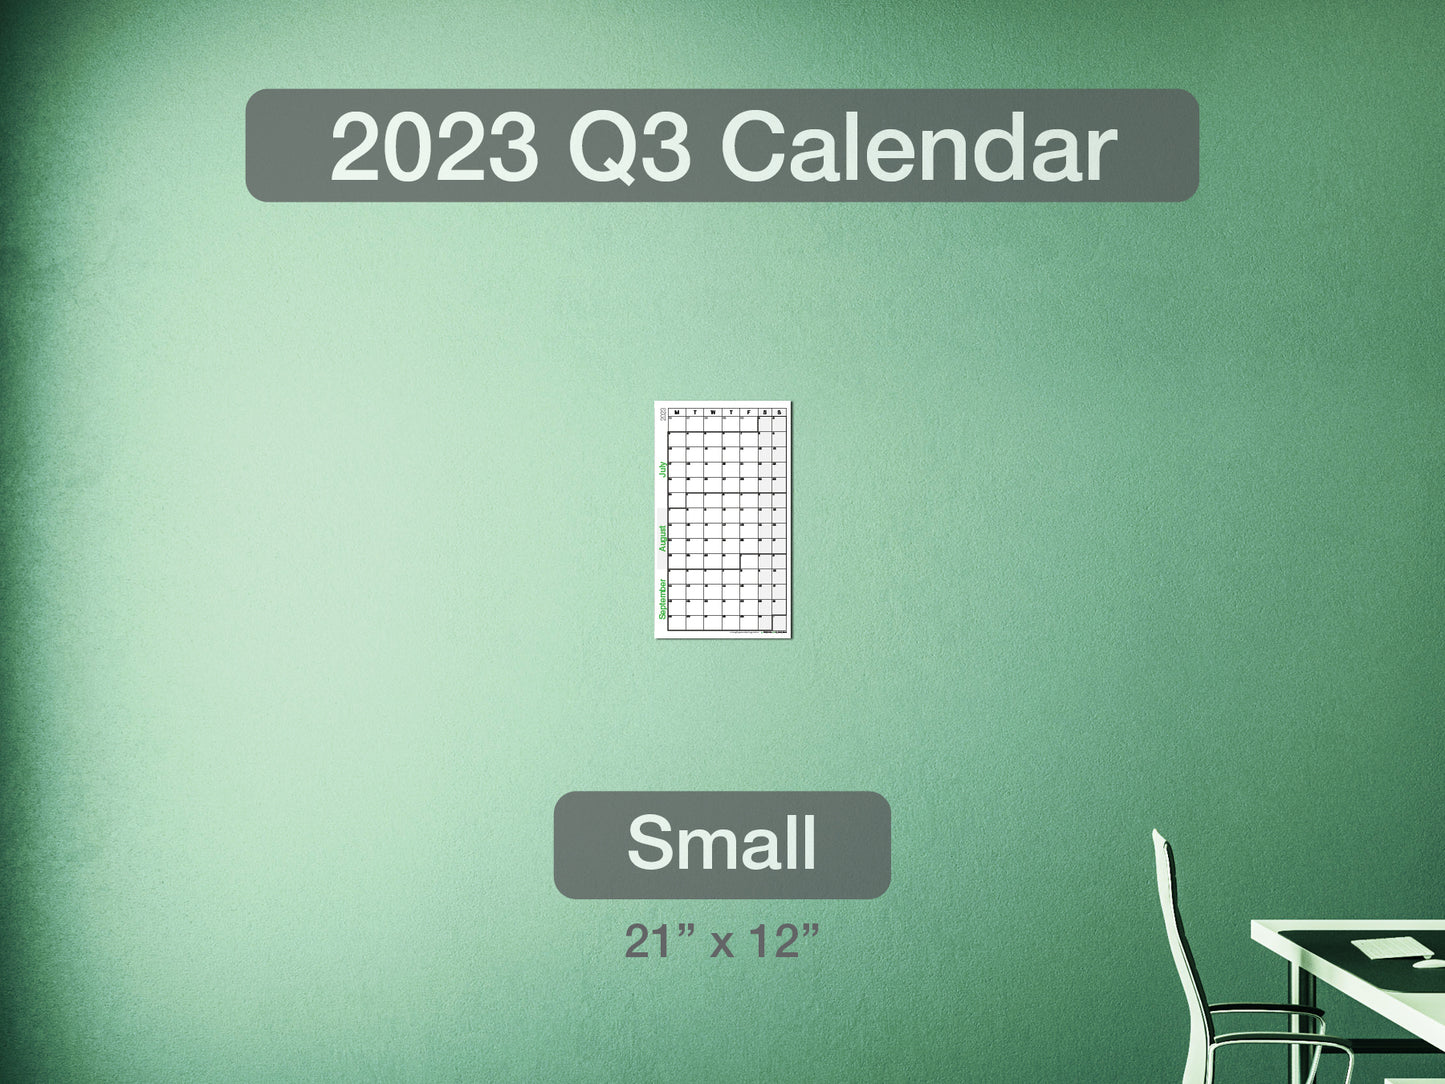 2023 Q3 Calendar Small